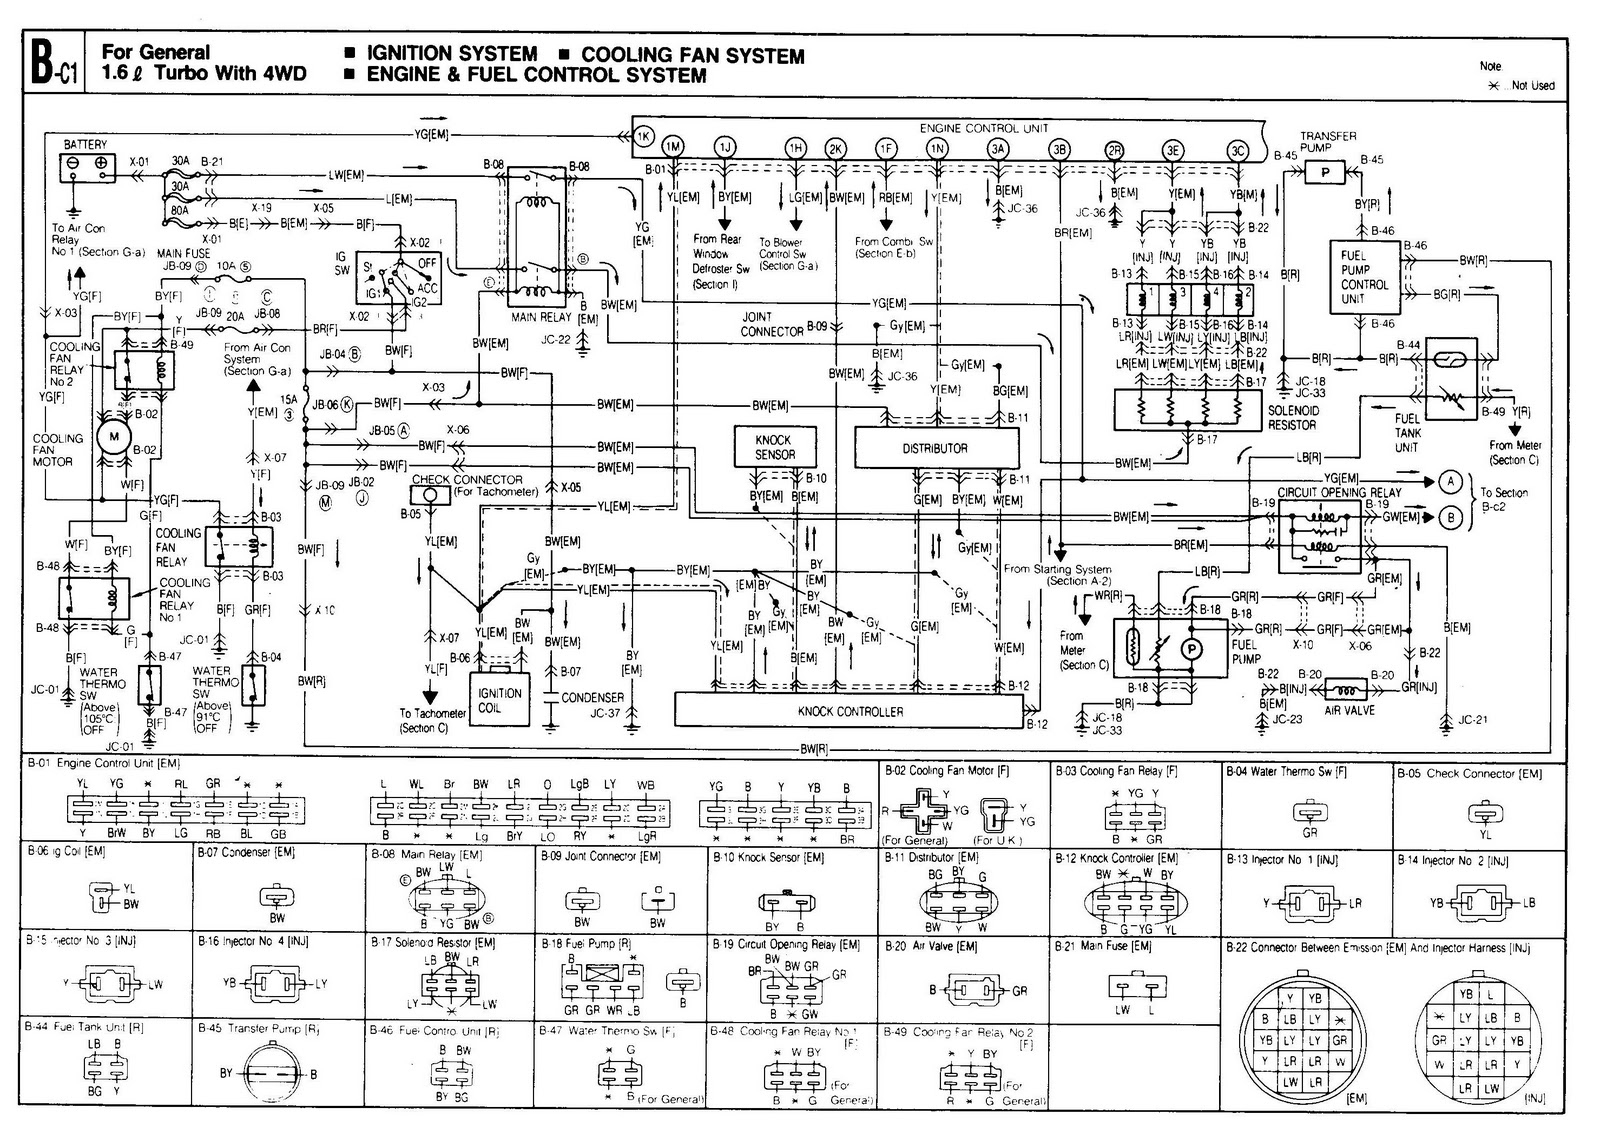 97 Mazda 626 Engine Diagram | Wiring Diagram - Automobile Wiring Diagram